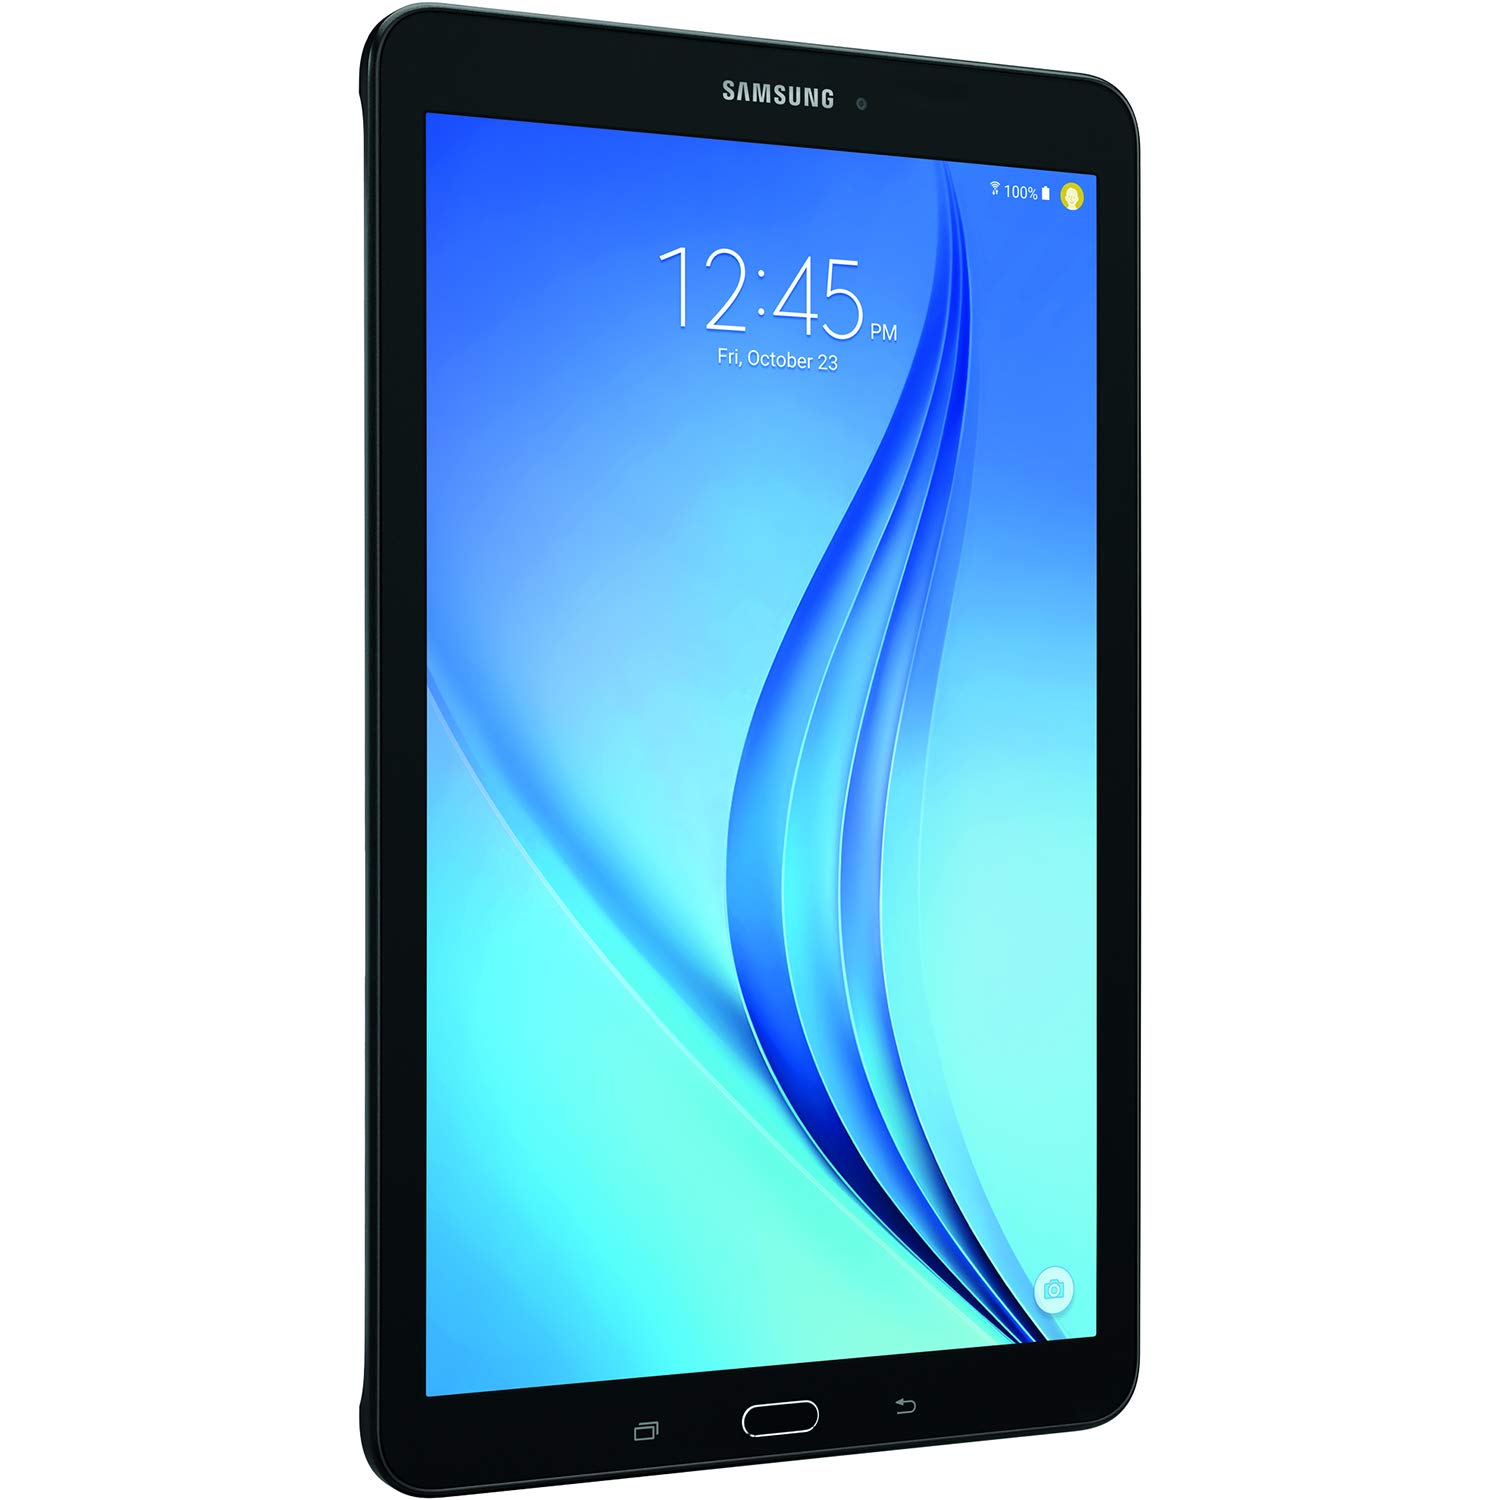 Samsung Galaxy Tab E 9.6" 16GB WiFi - Black